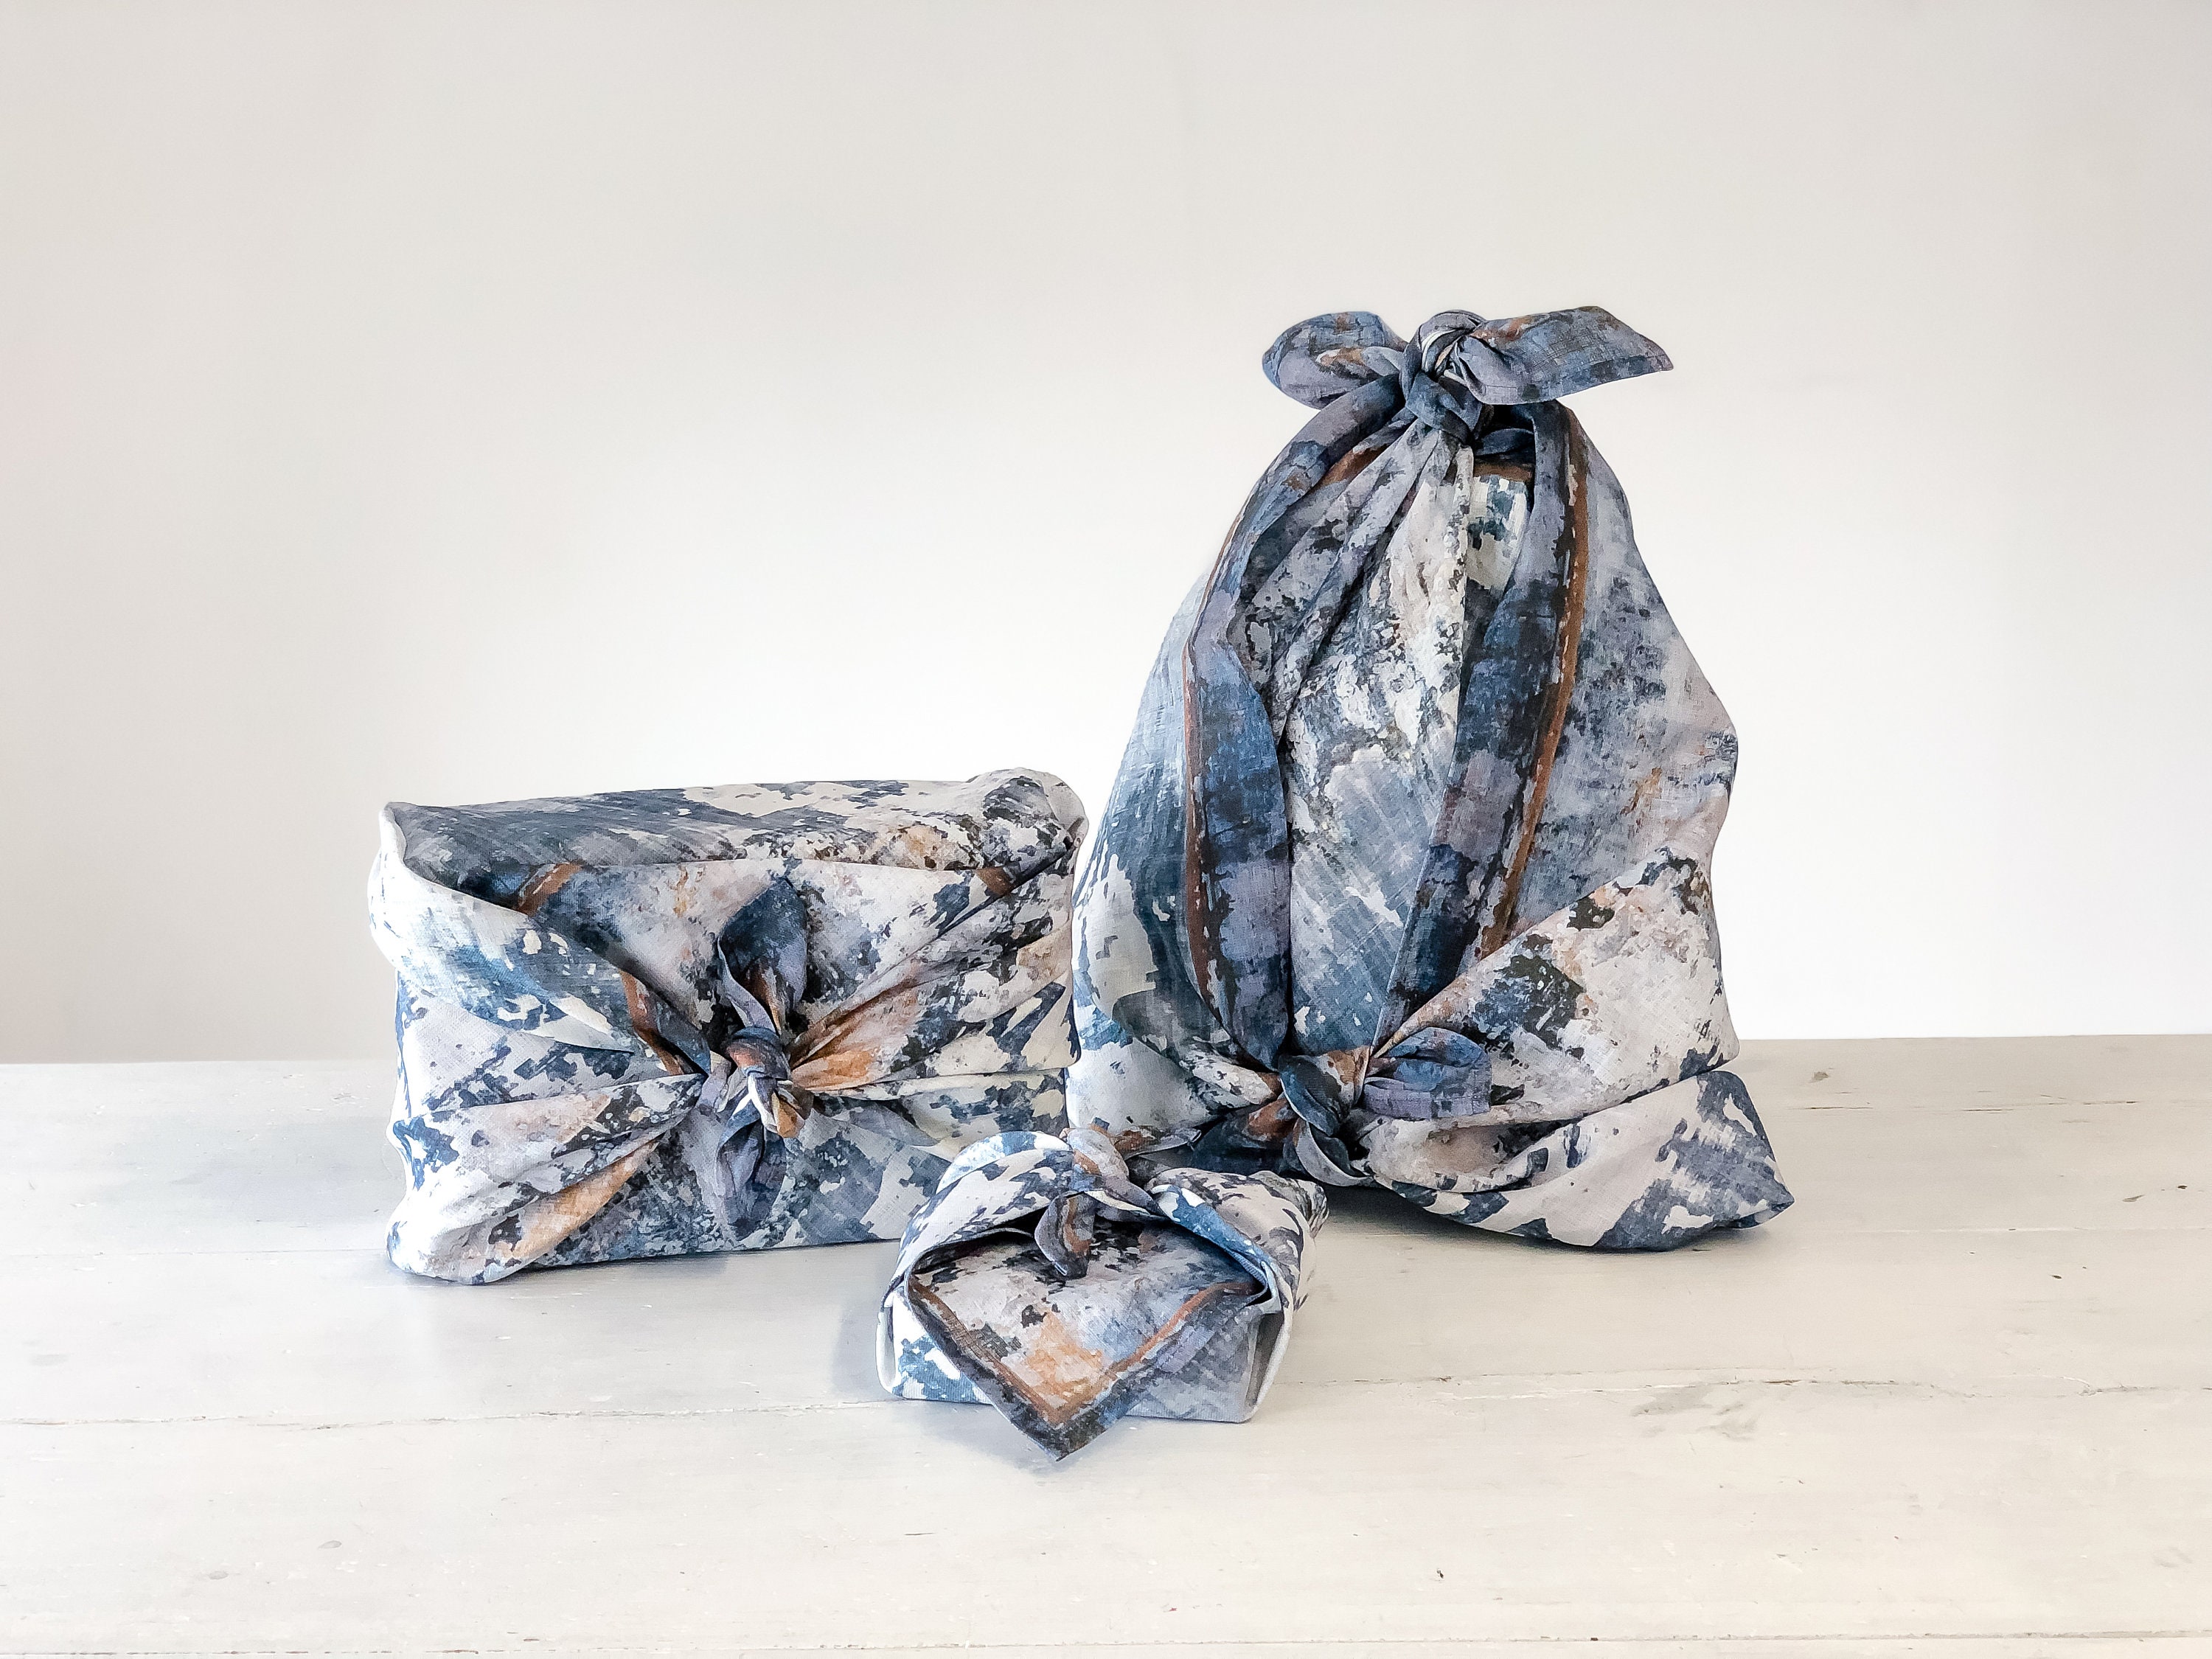 Furoshiki - Gift Wrapping Fabric Cloth – Uvida Shop: Boston's first Zero  Waste Store